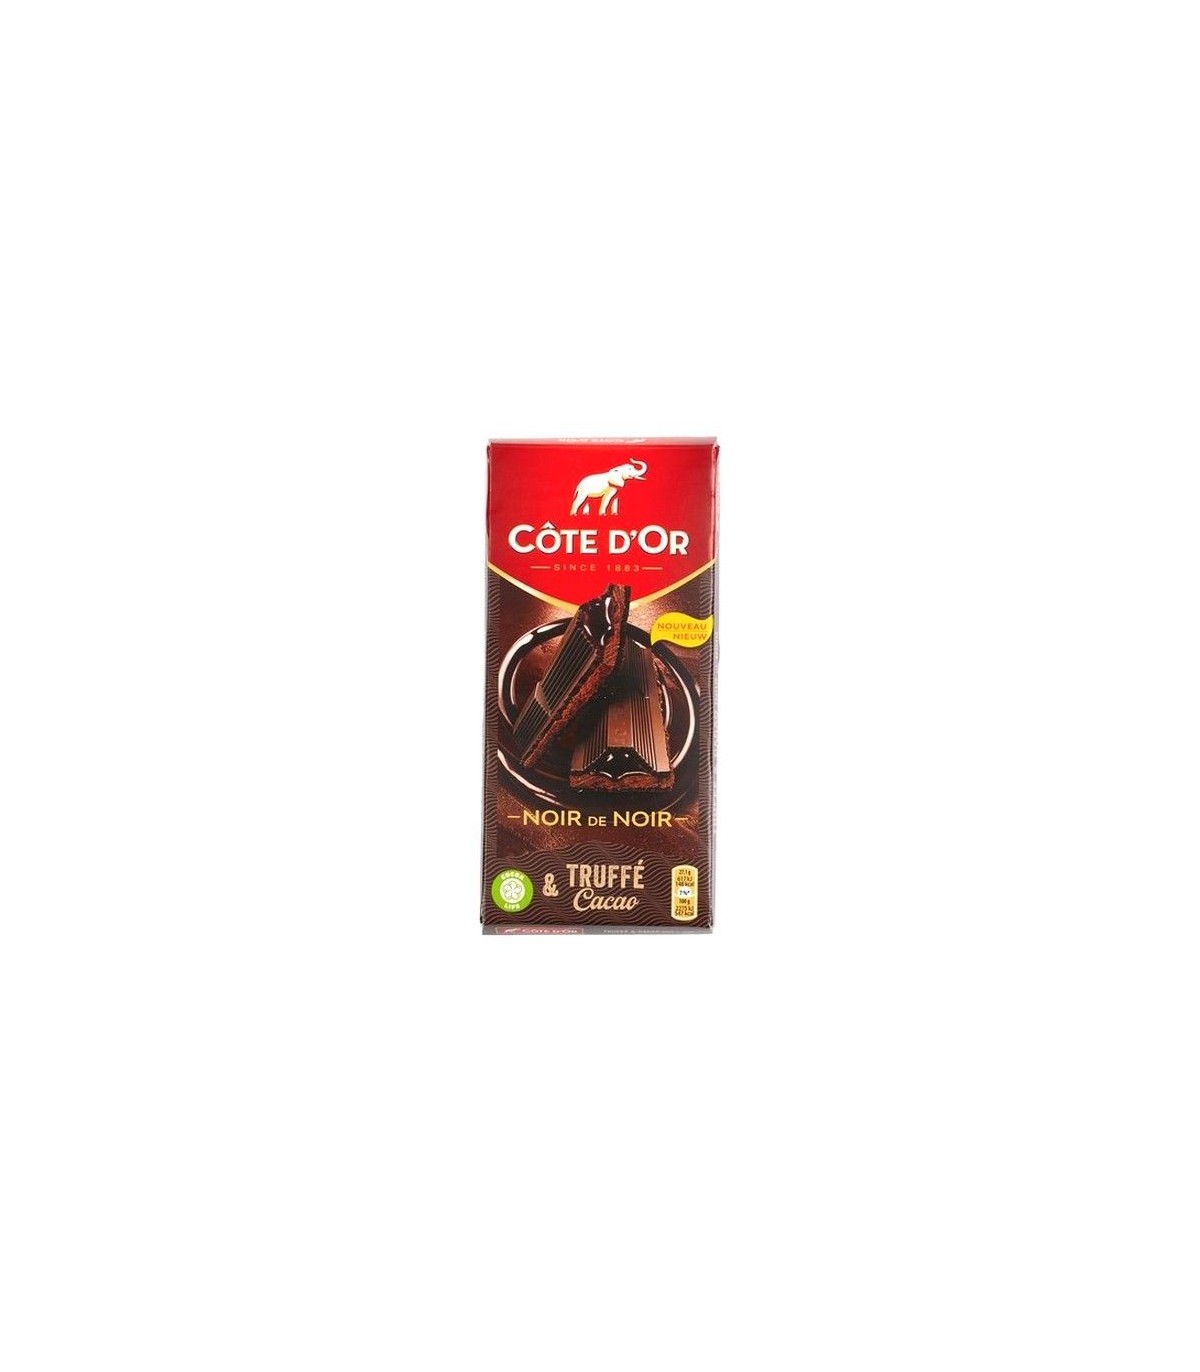 Côte d'Or tablette noir truffé cacao 190 gr CHOCKIES